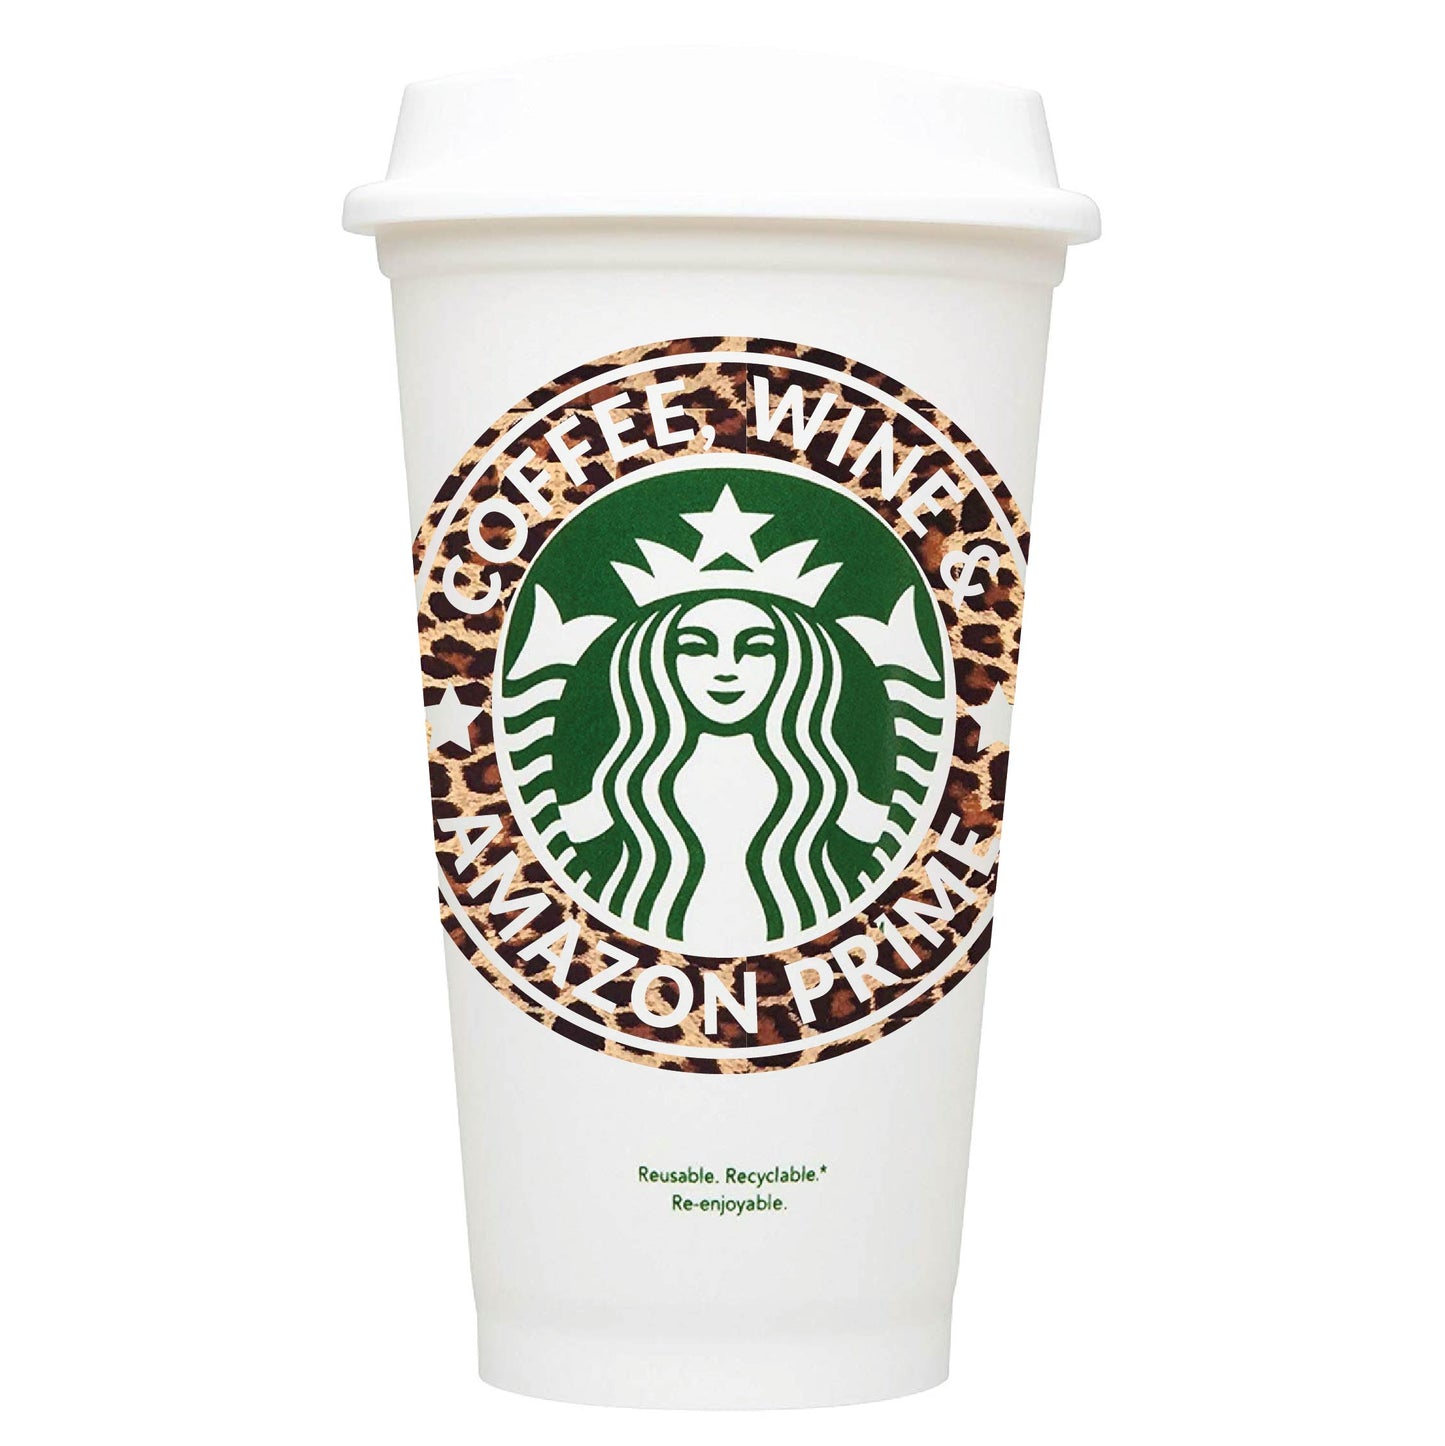 Coffee, Wine & Amazon Prime Starbucks Hot Cup